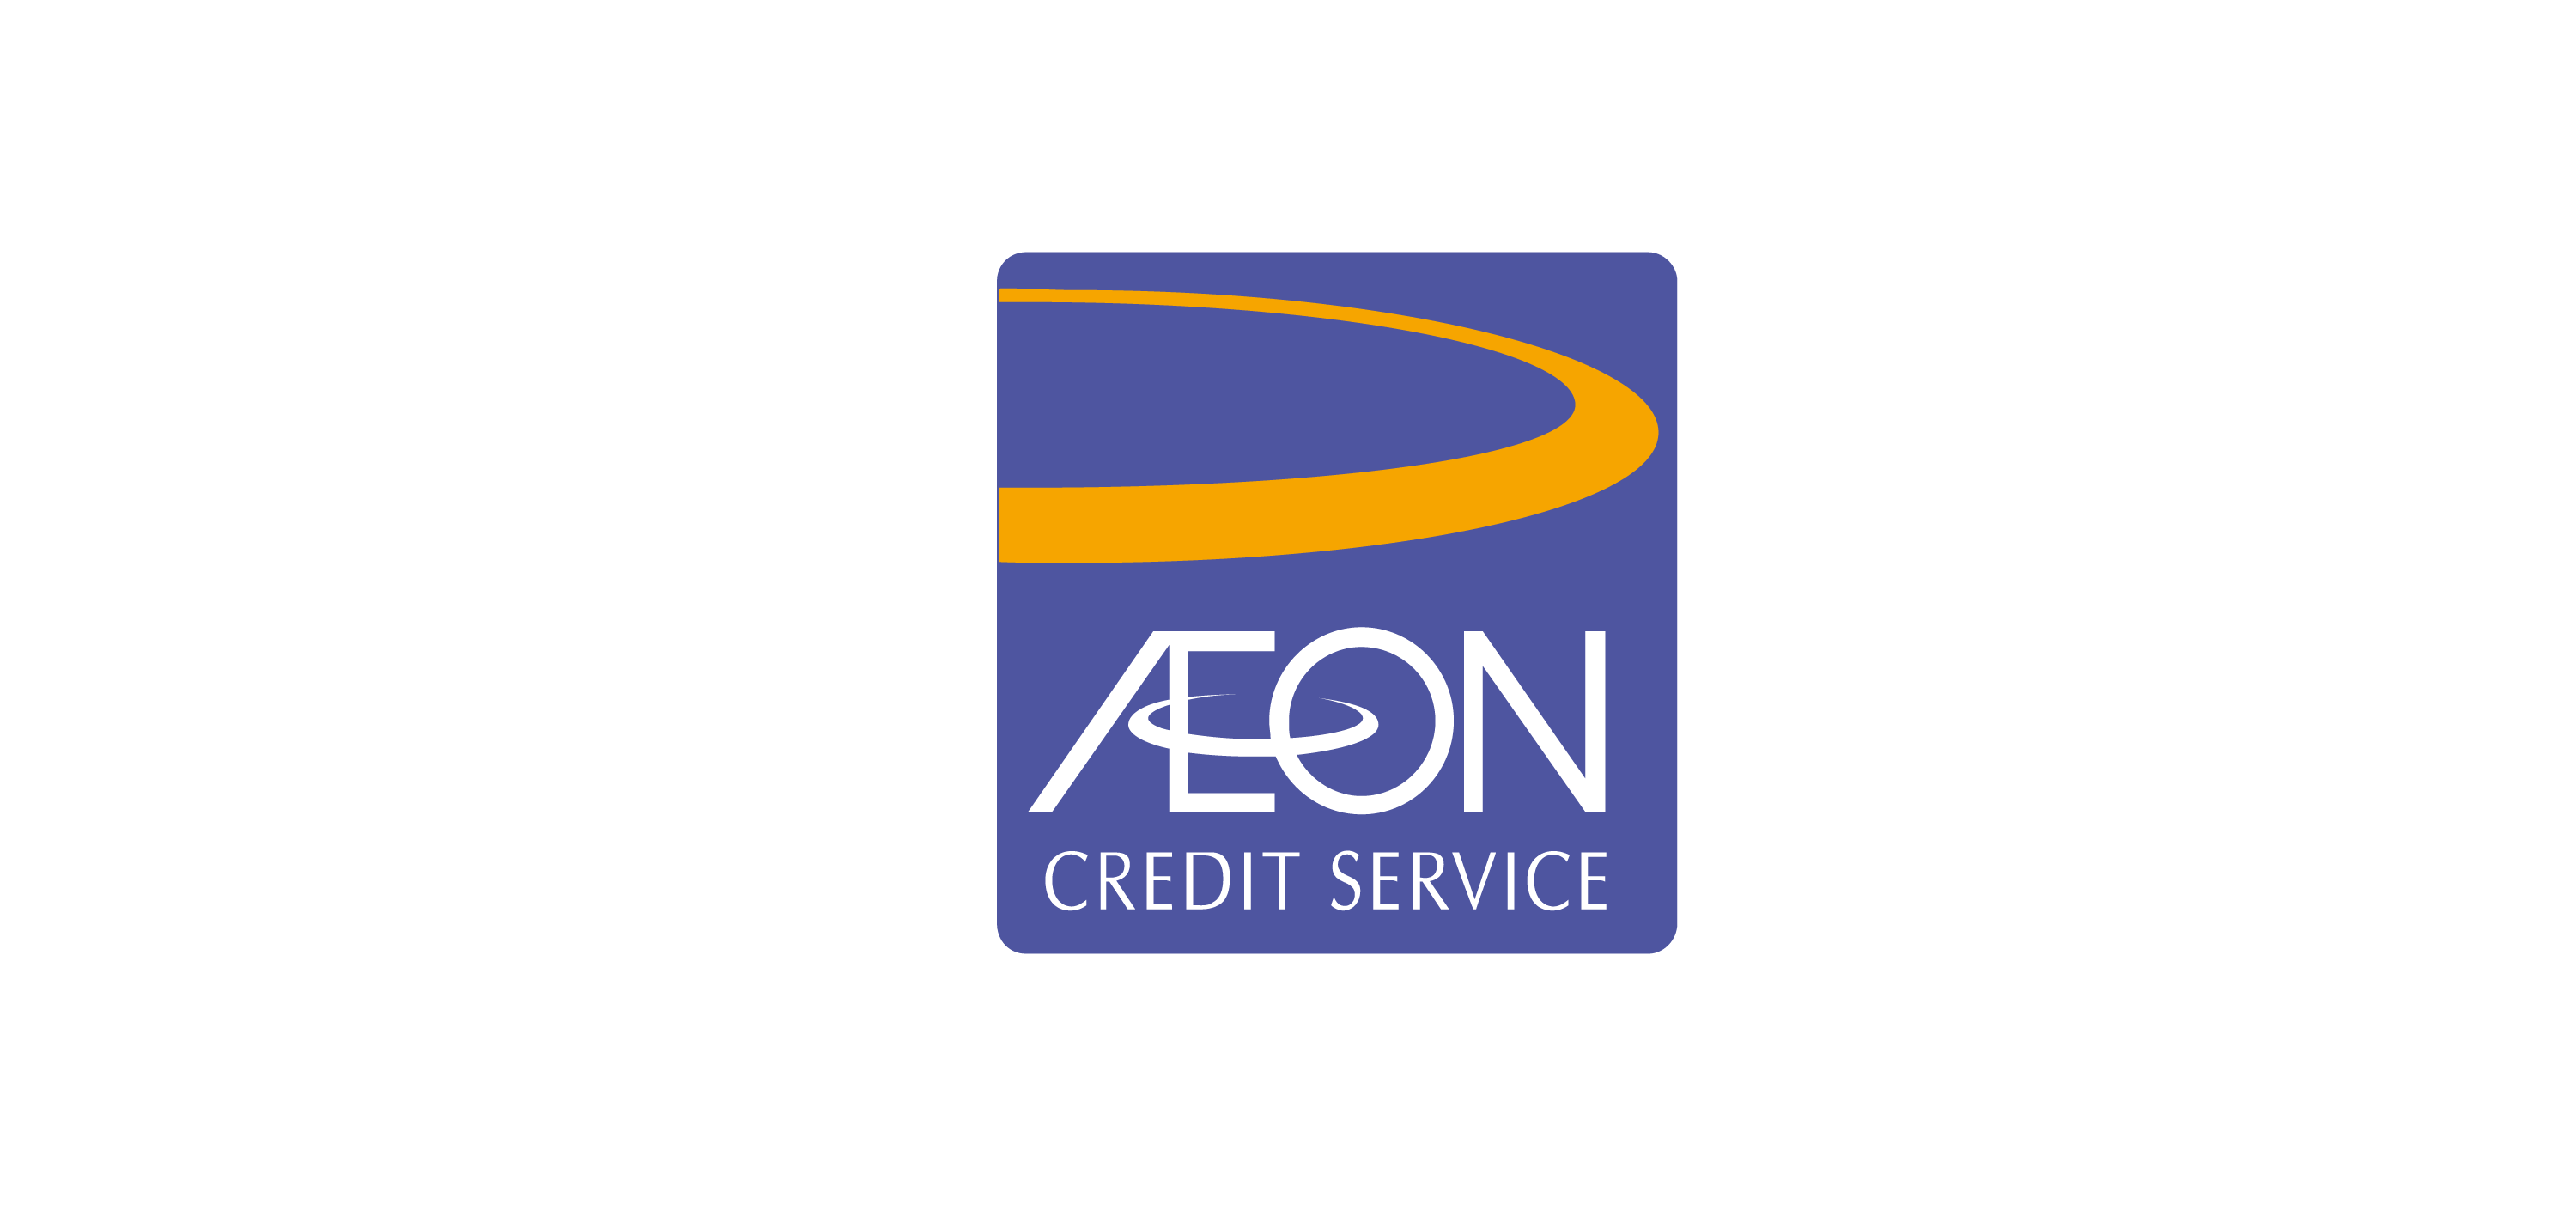 AEON Credit Services